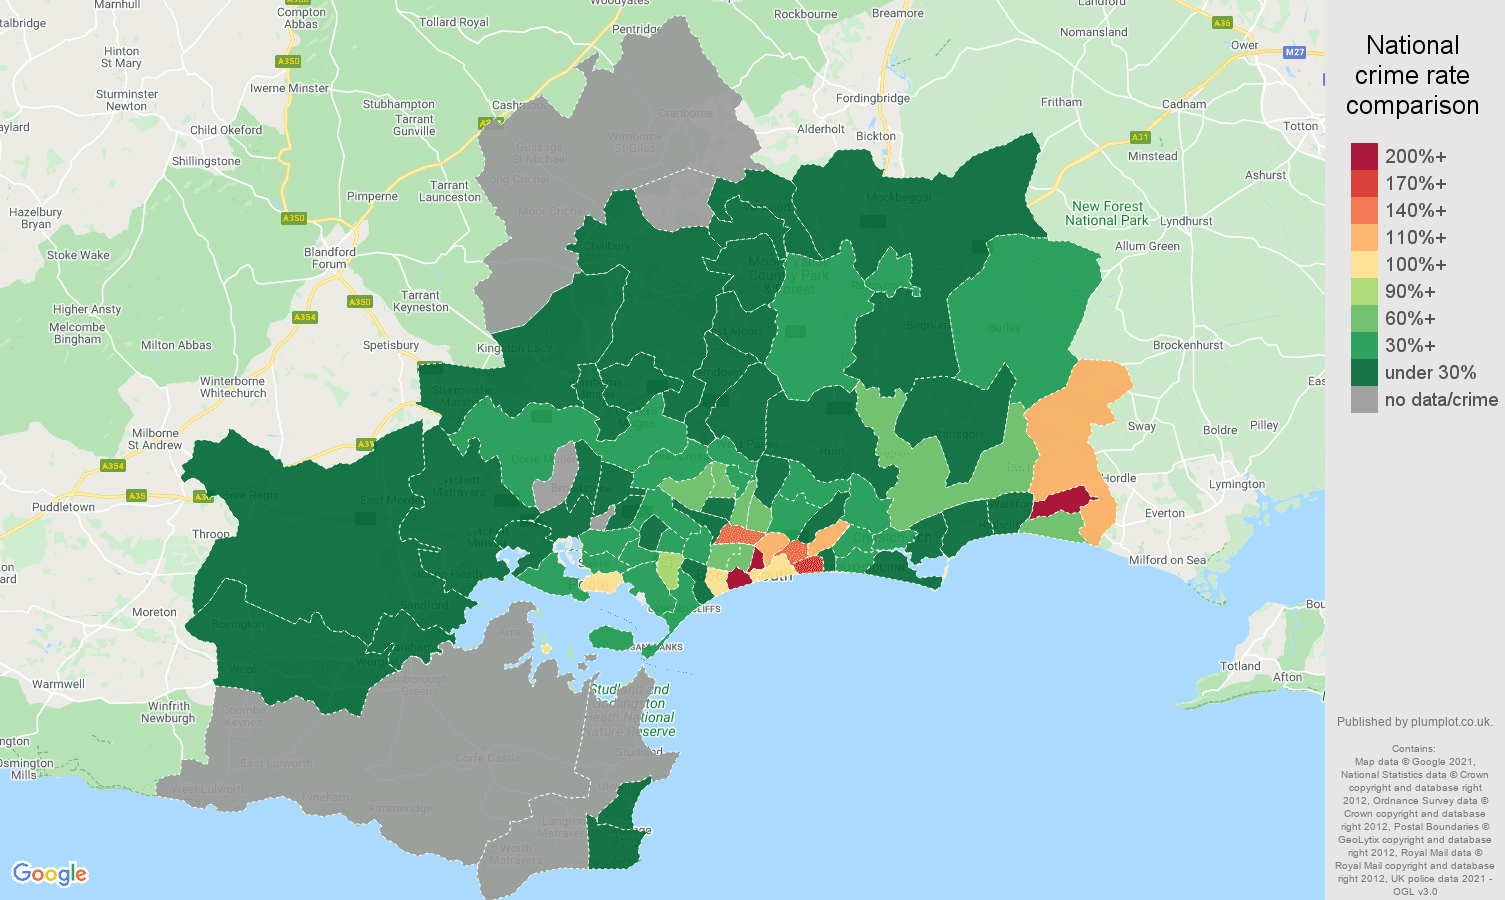 Bournemouth drugs crime rate comparison map